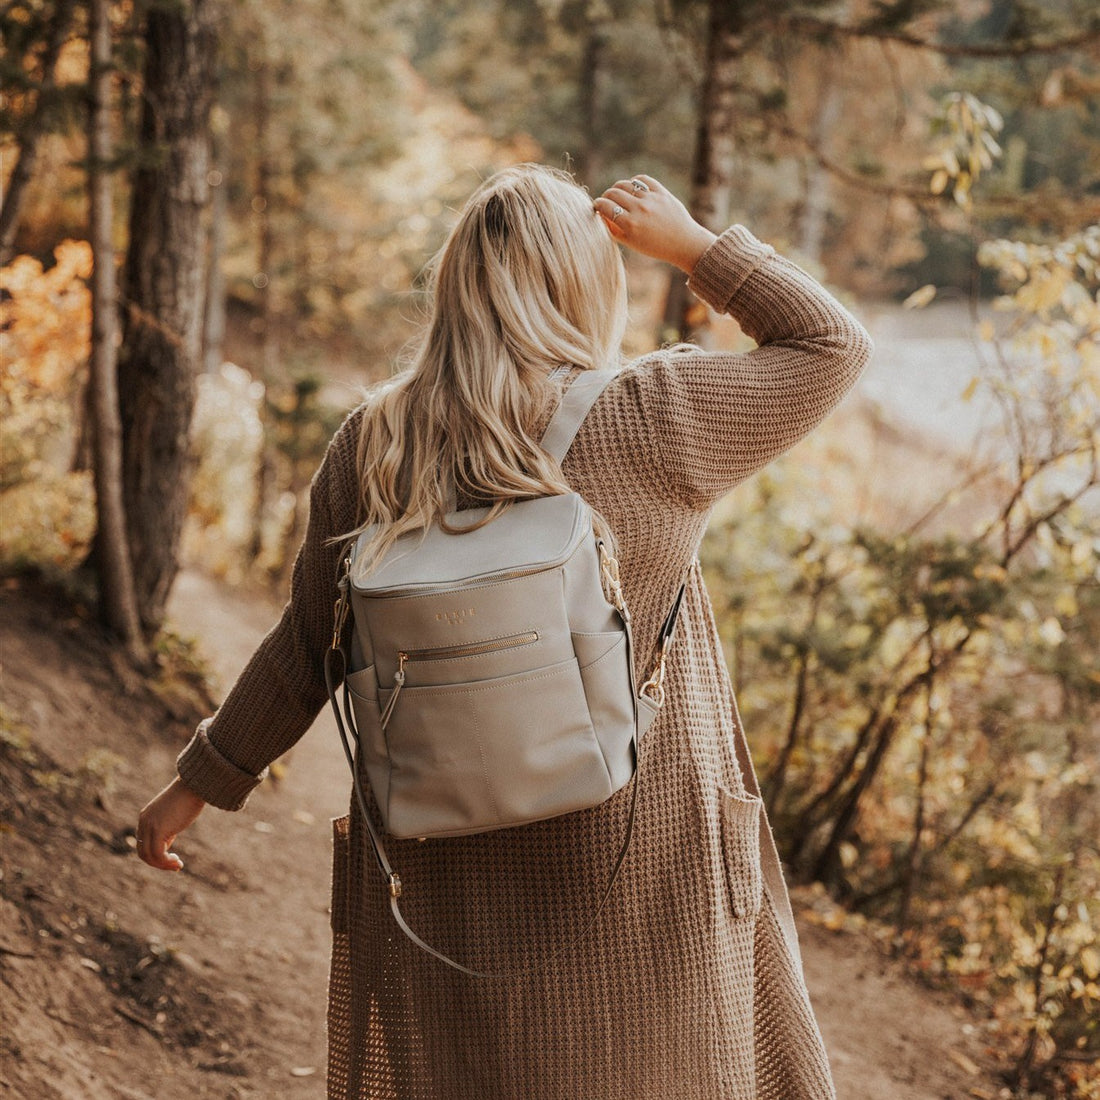 elkie Stone capri backpack being worn on girl in the woods